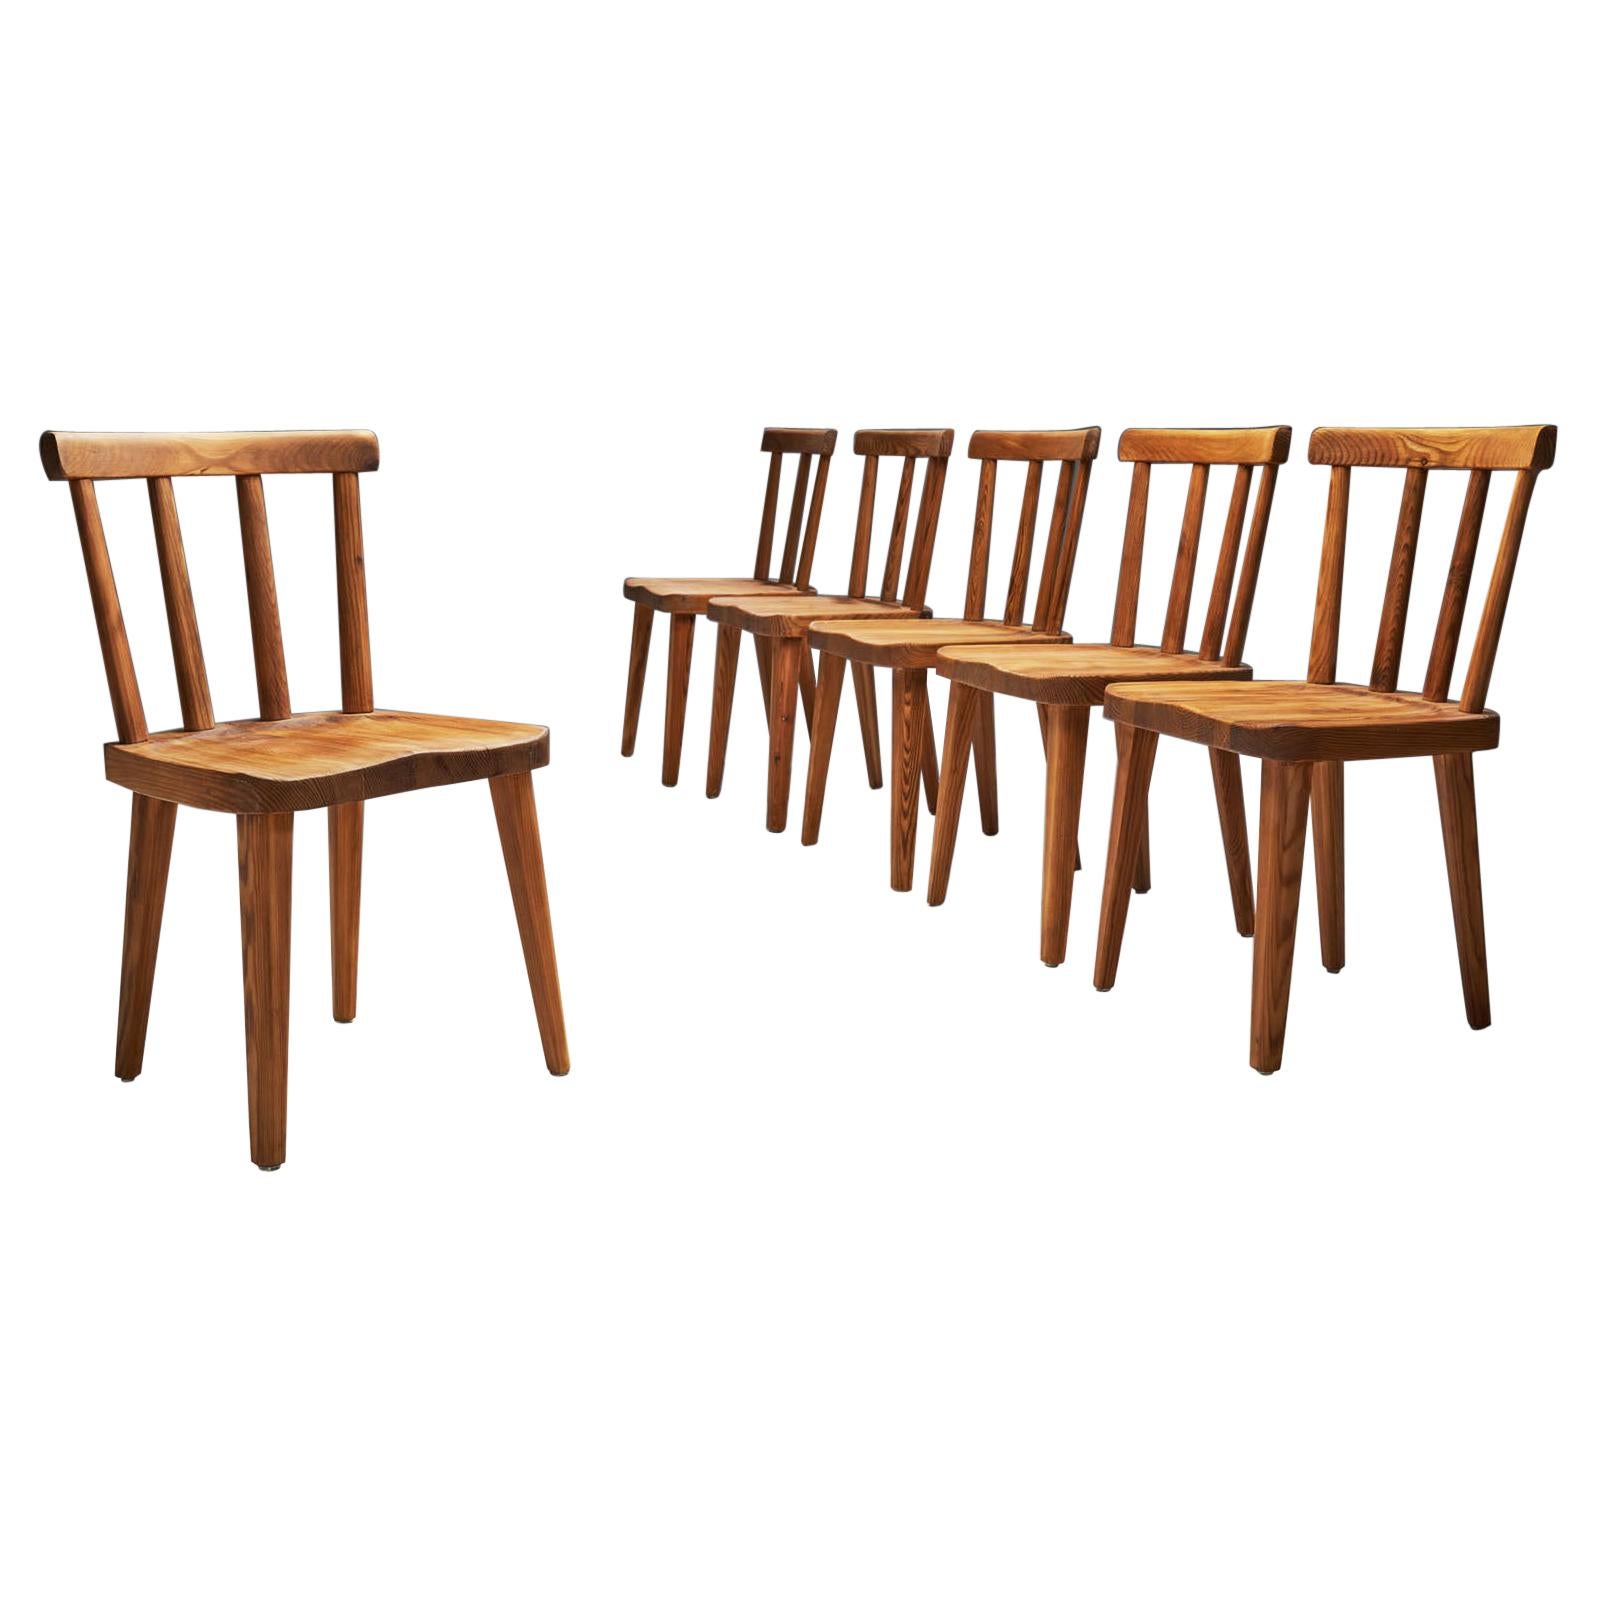 Axel Einar Hjorth “Utö” Dining Chairs for Nordiska Kompaniet, Sweden 1930s